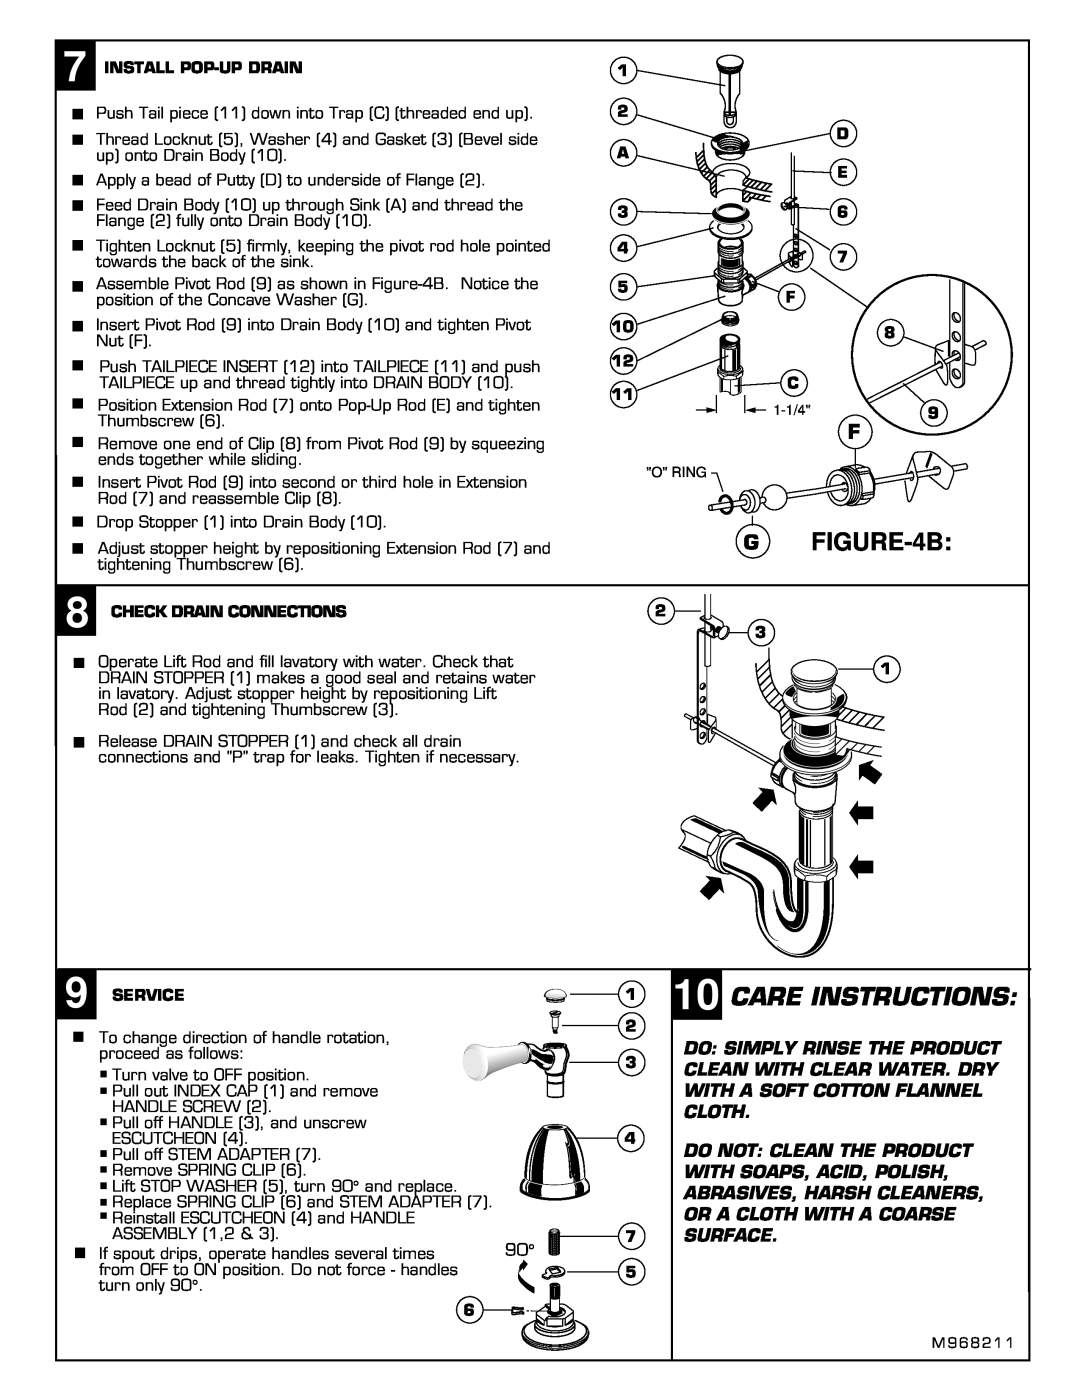 American Standard 2881 installation instructions GFIGURE-4B, Care Instructions 